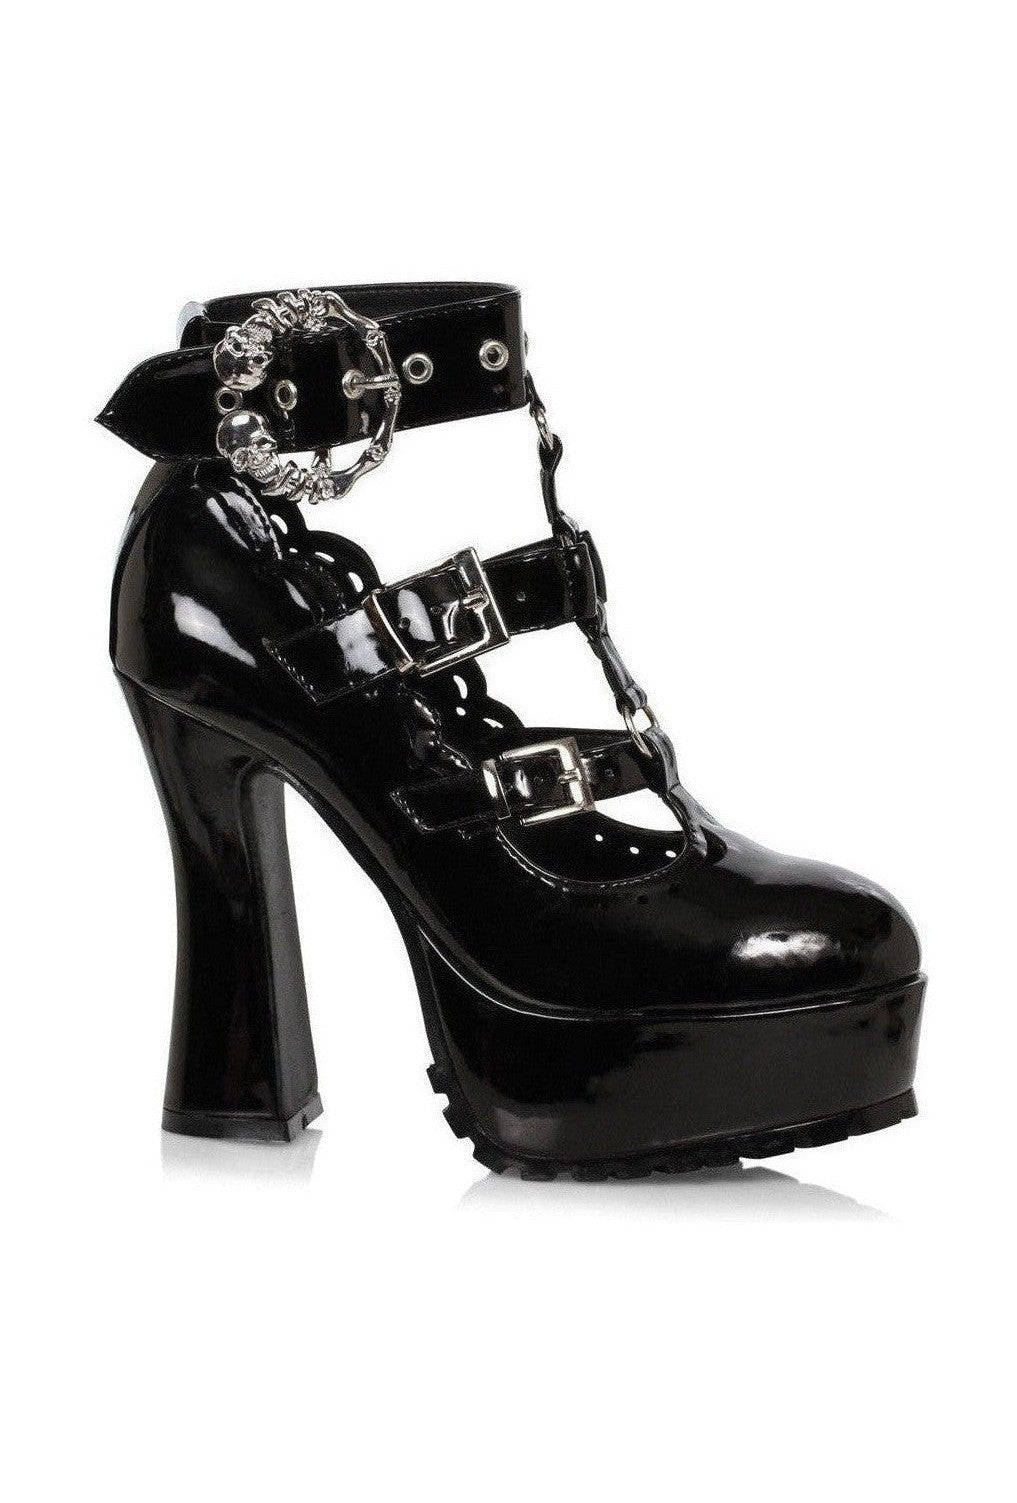 557-DAPHNE Mary Jane | Black Faux Leather-Mary Jane-Ellie Shoes-SEXYSHOES.COM